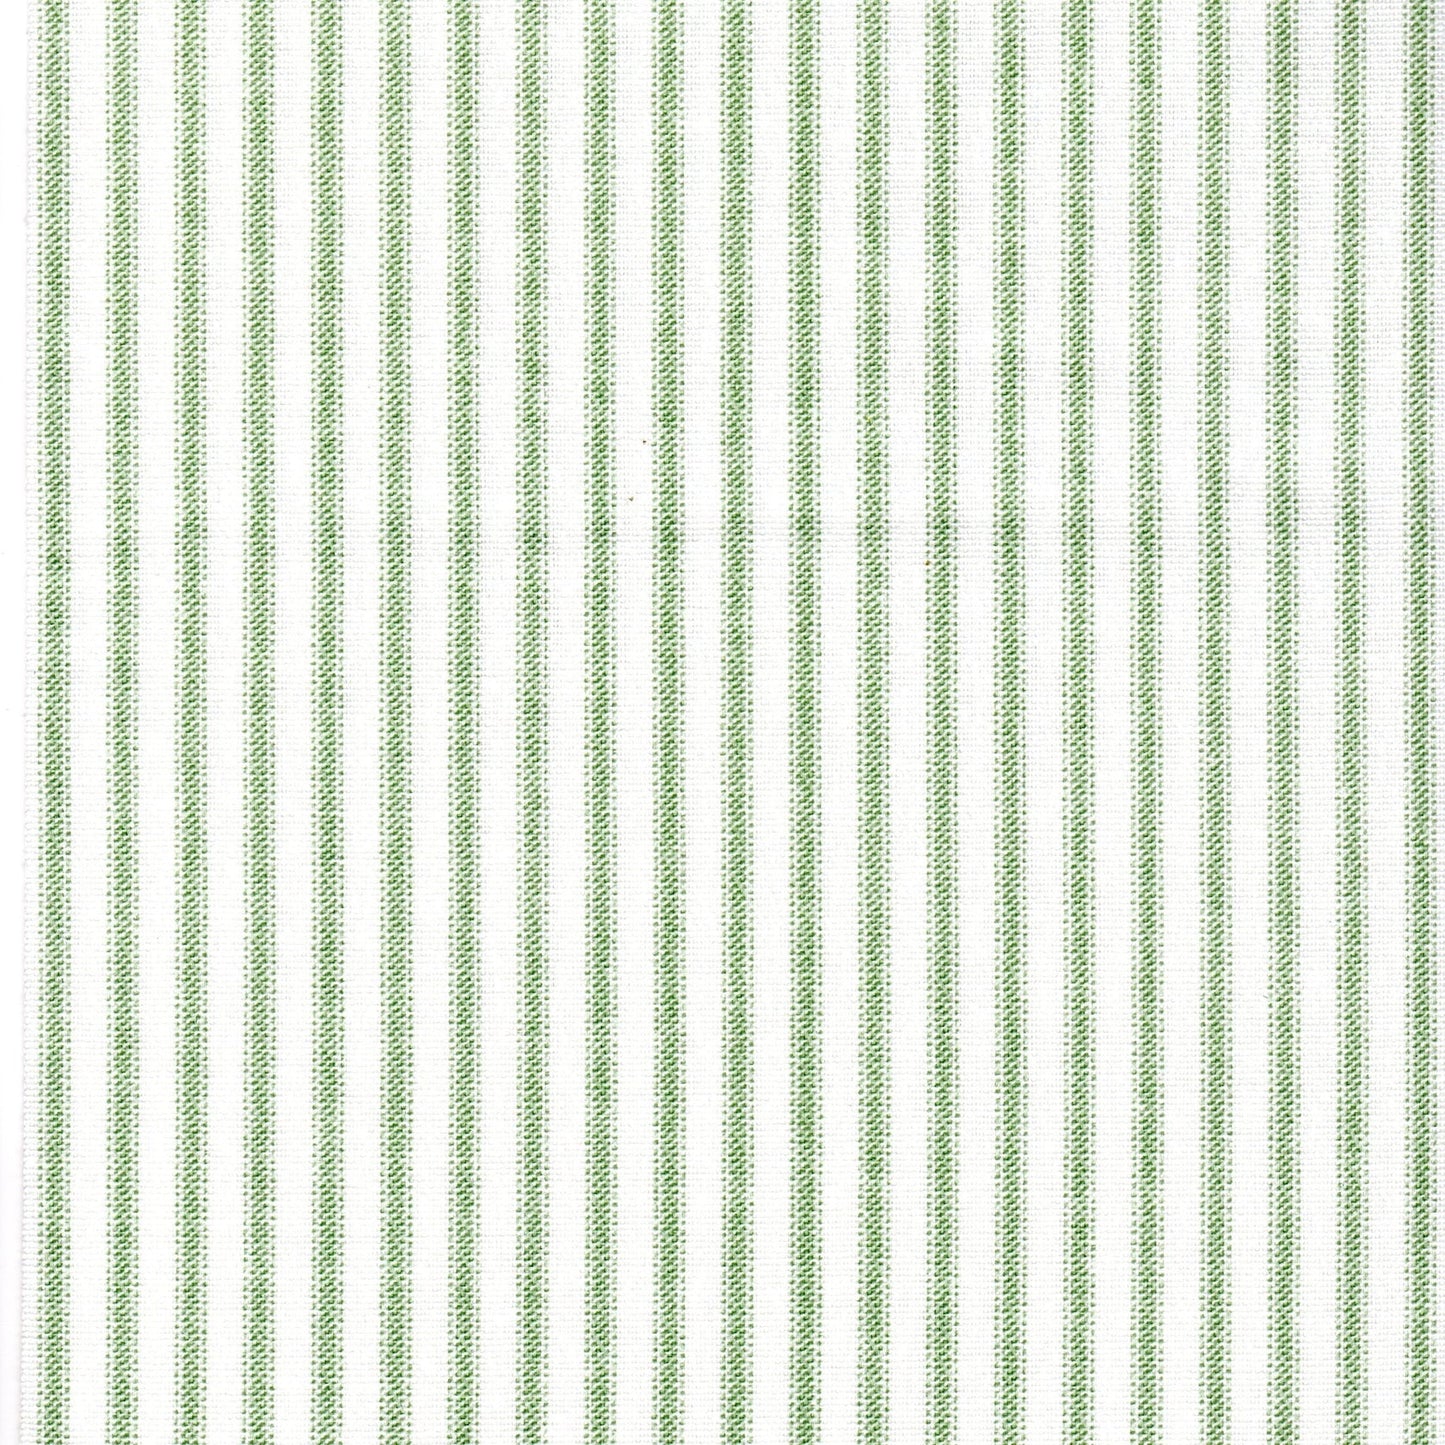 gathered crib skirt in Classic Sage Green Ticking Stripe on White